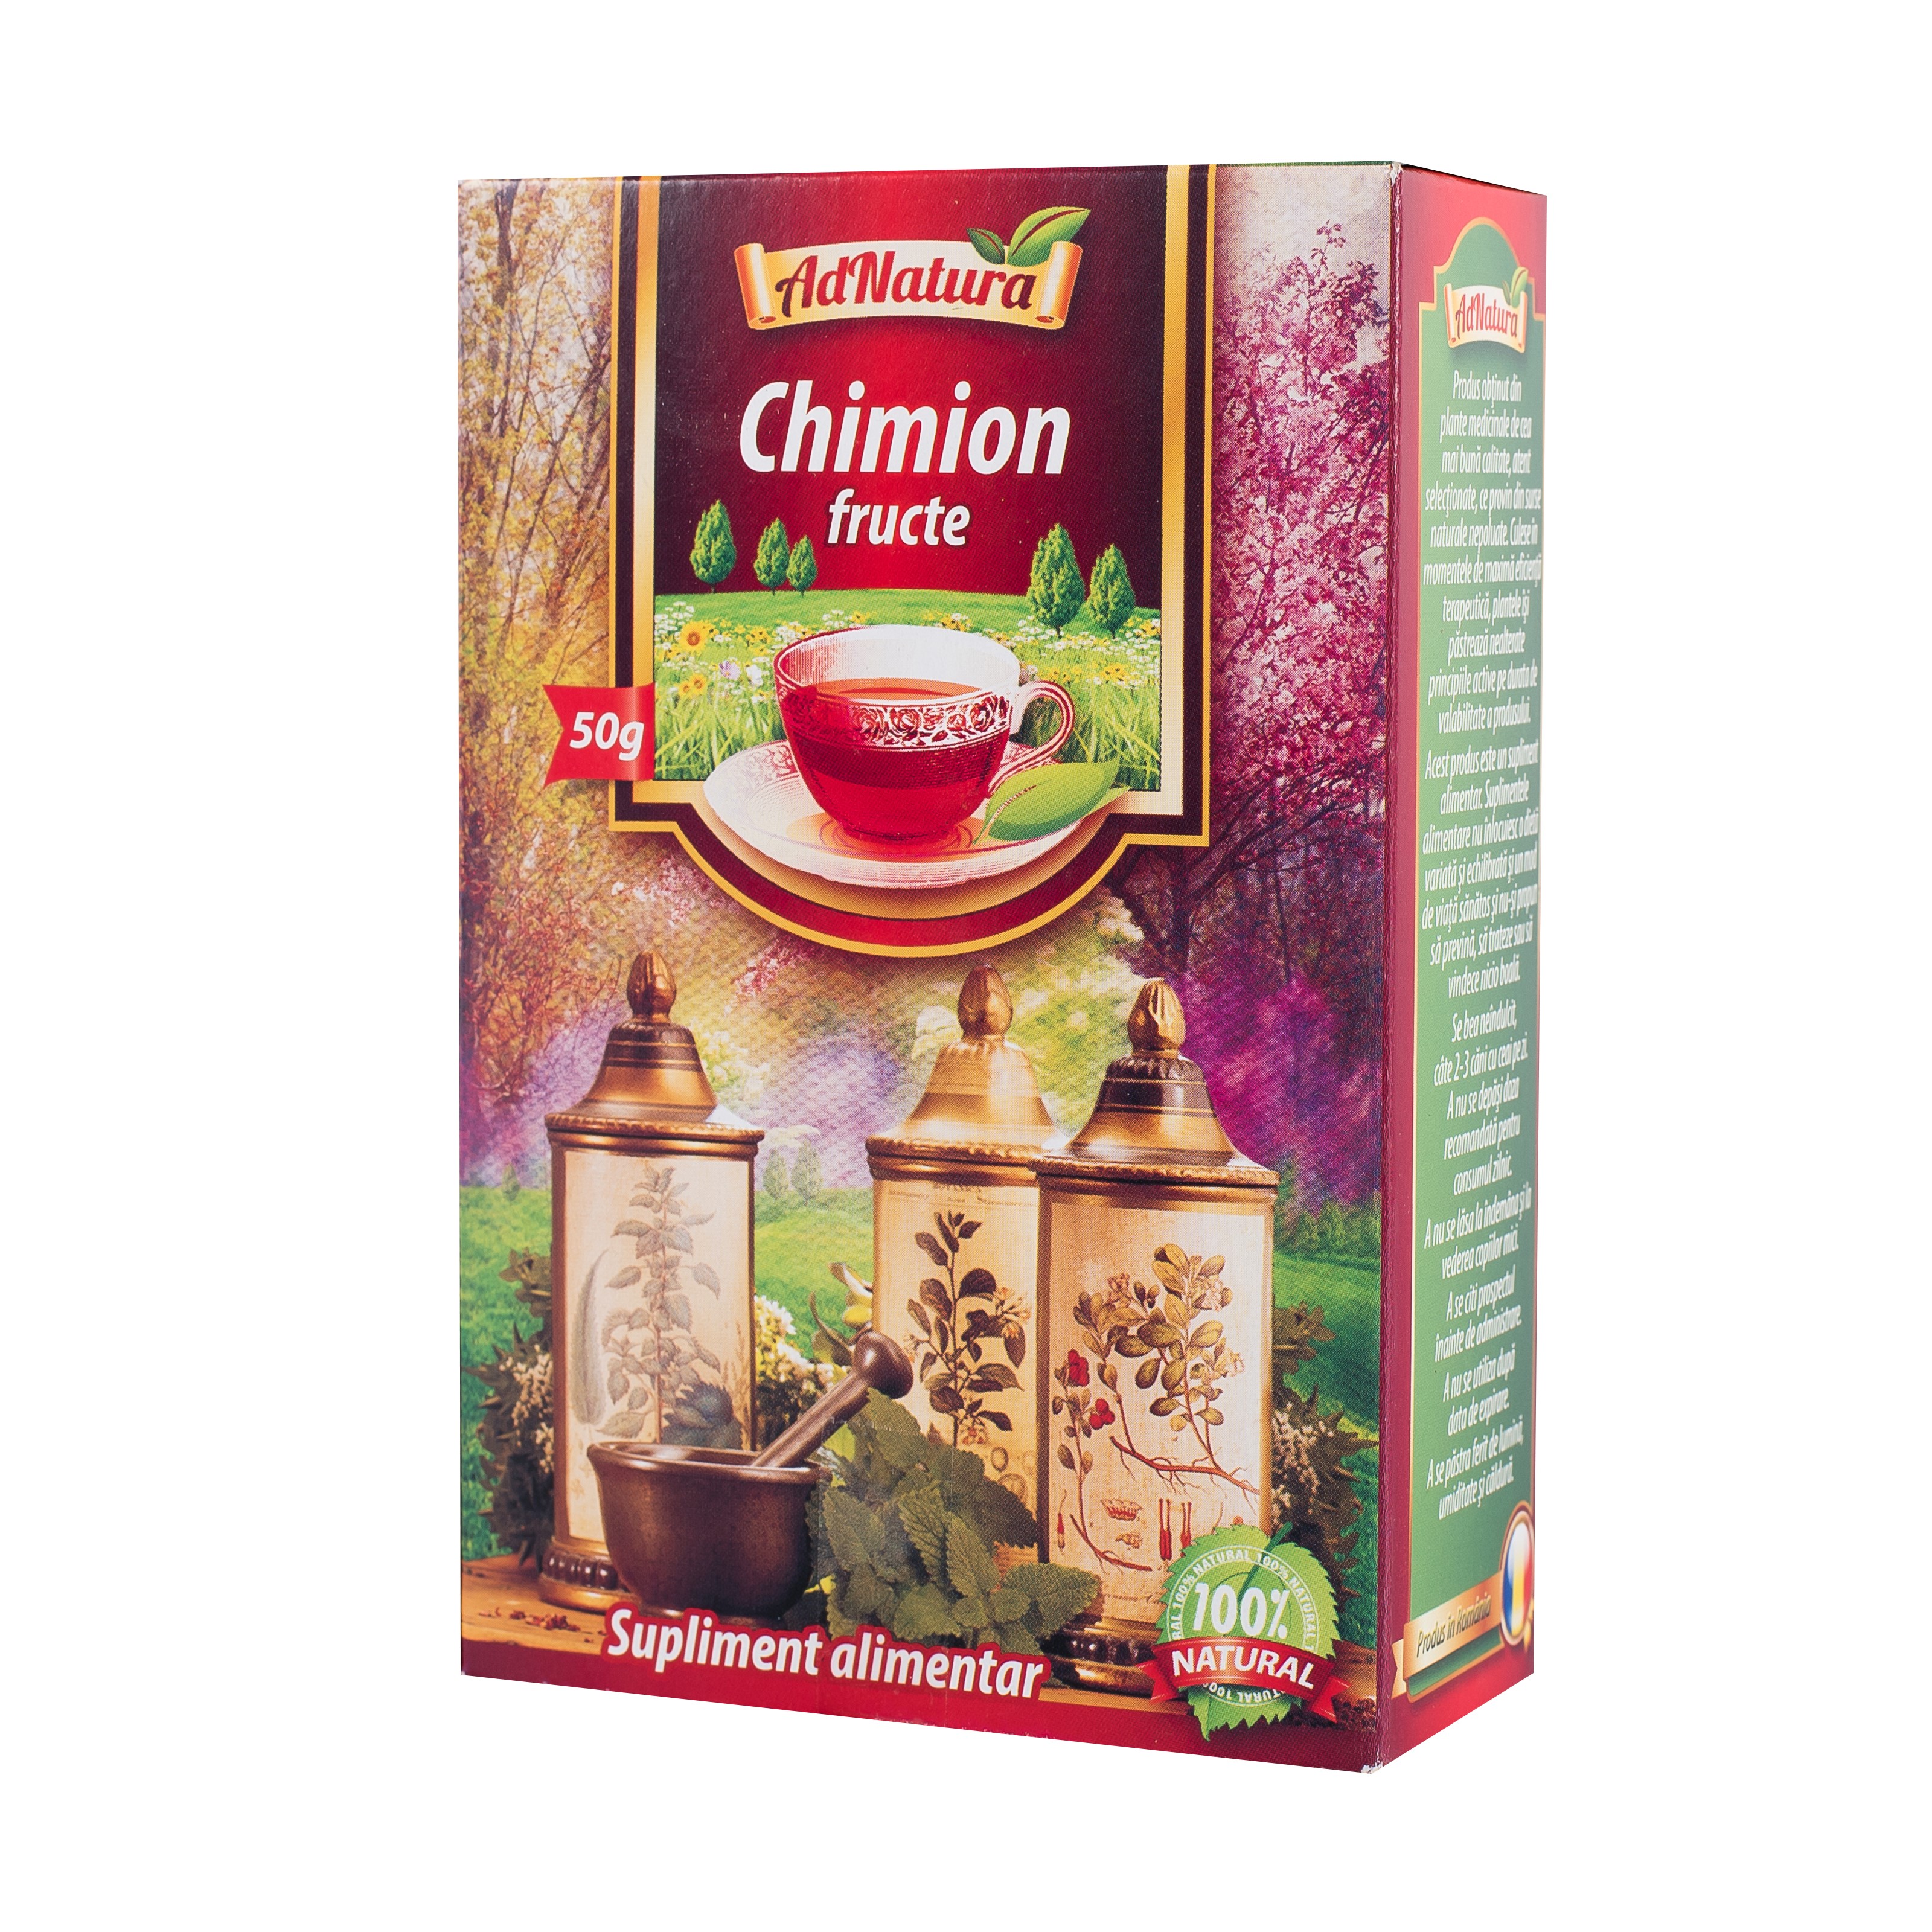 Ceai de Chimion fructe, 50 g, AdNatura